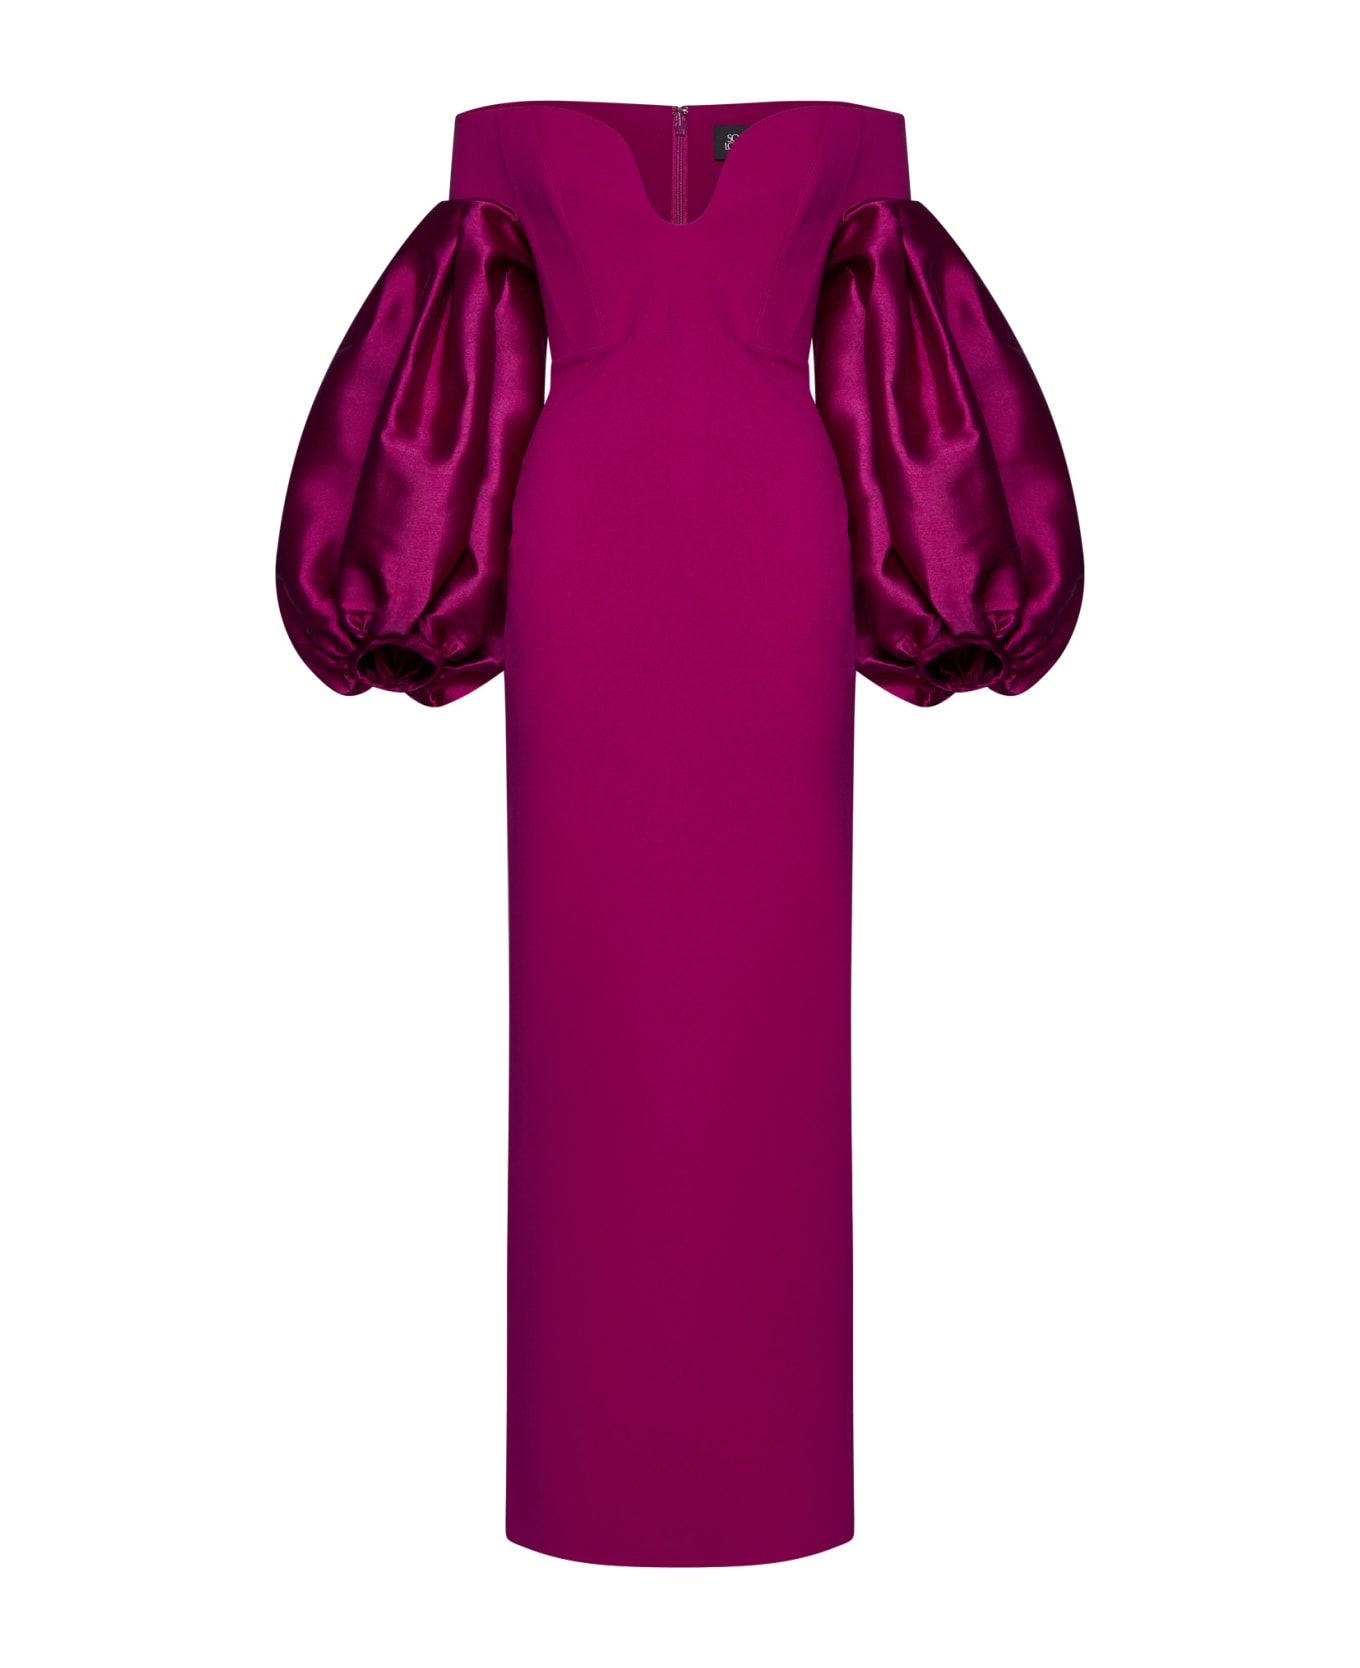 Solace London Dress - Fuchsia